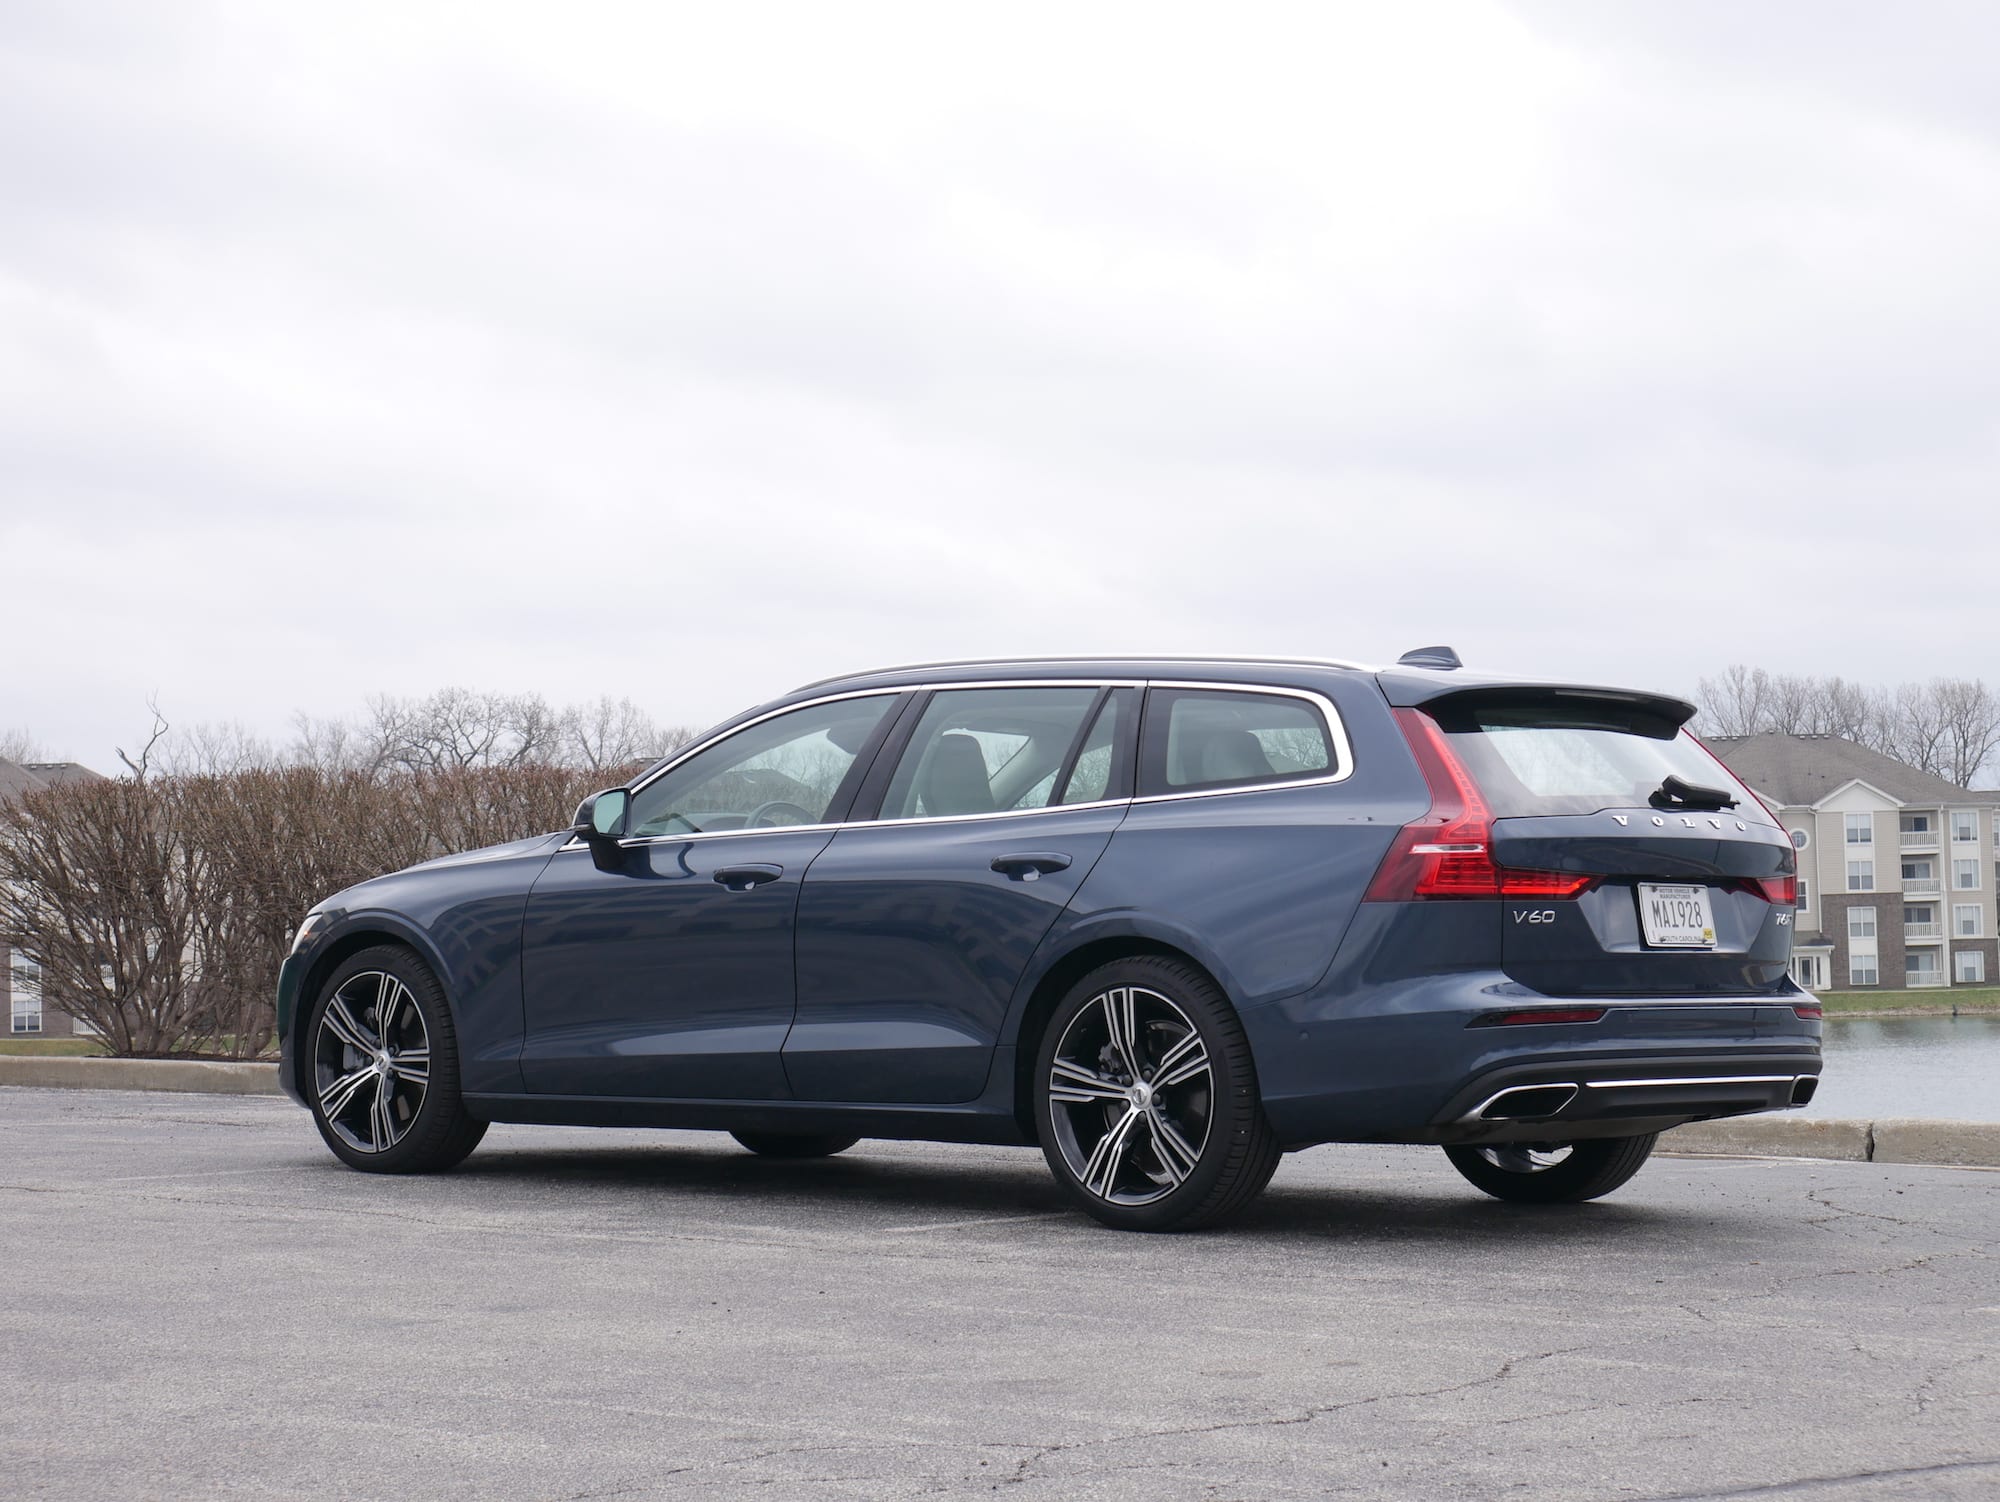 2019 Volvo V60 T6 Inscription rear three-quarter view